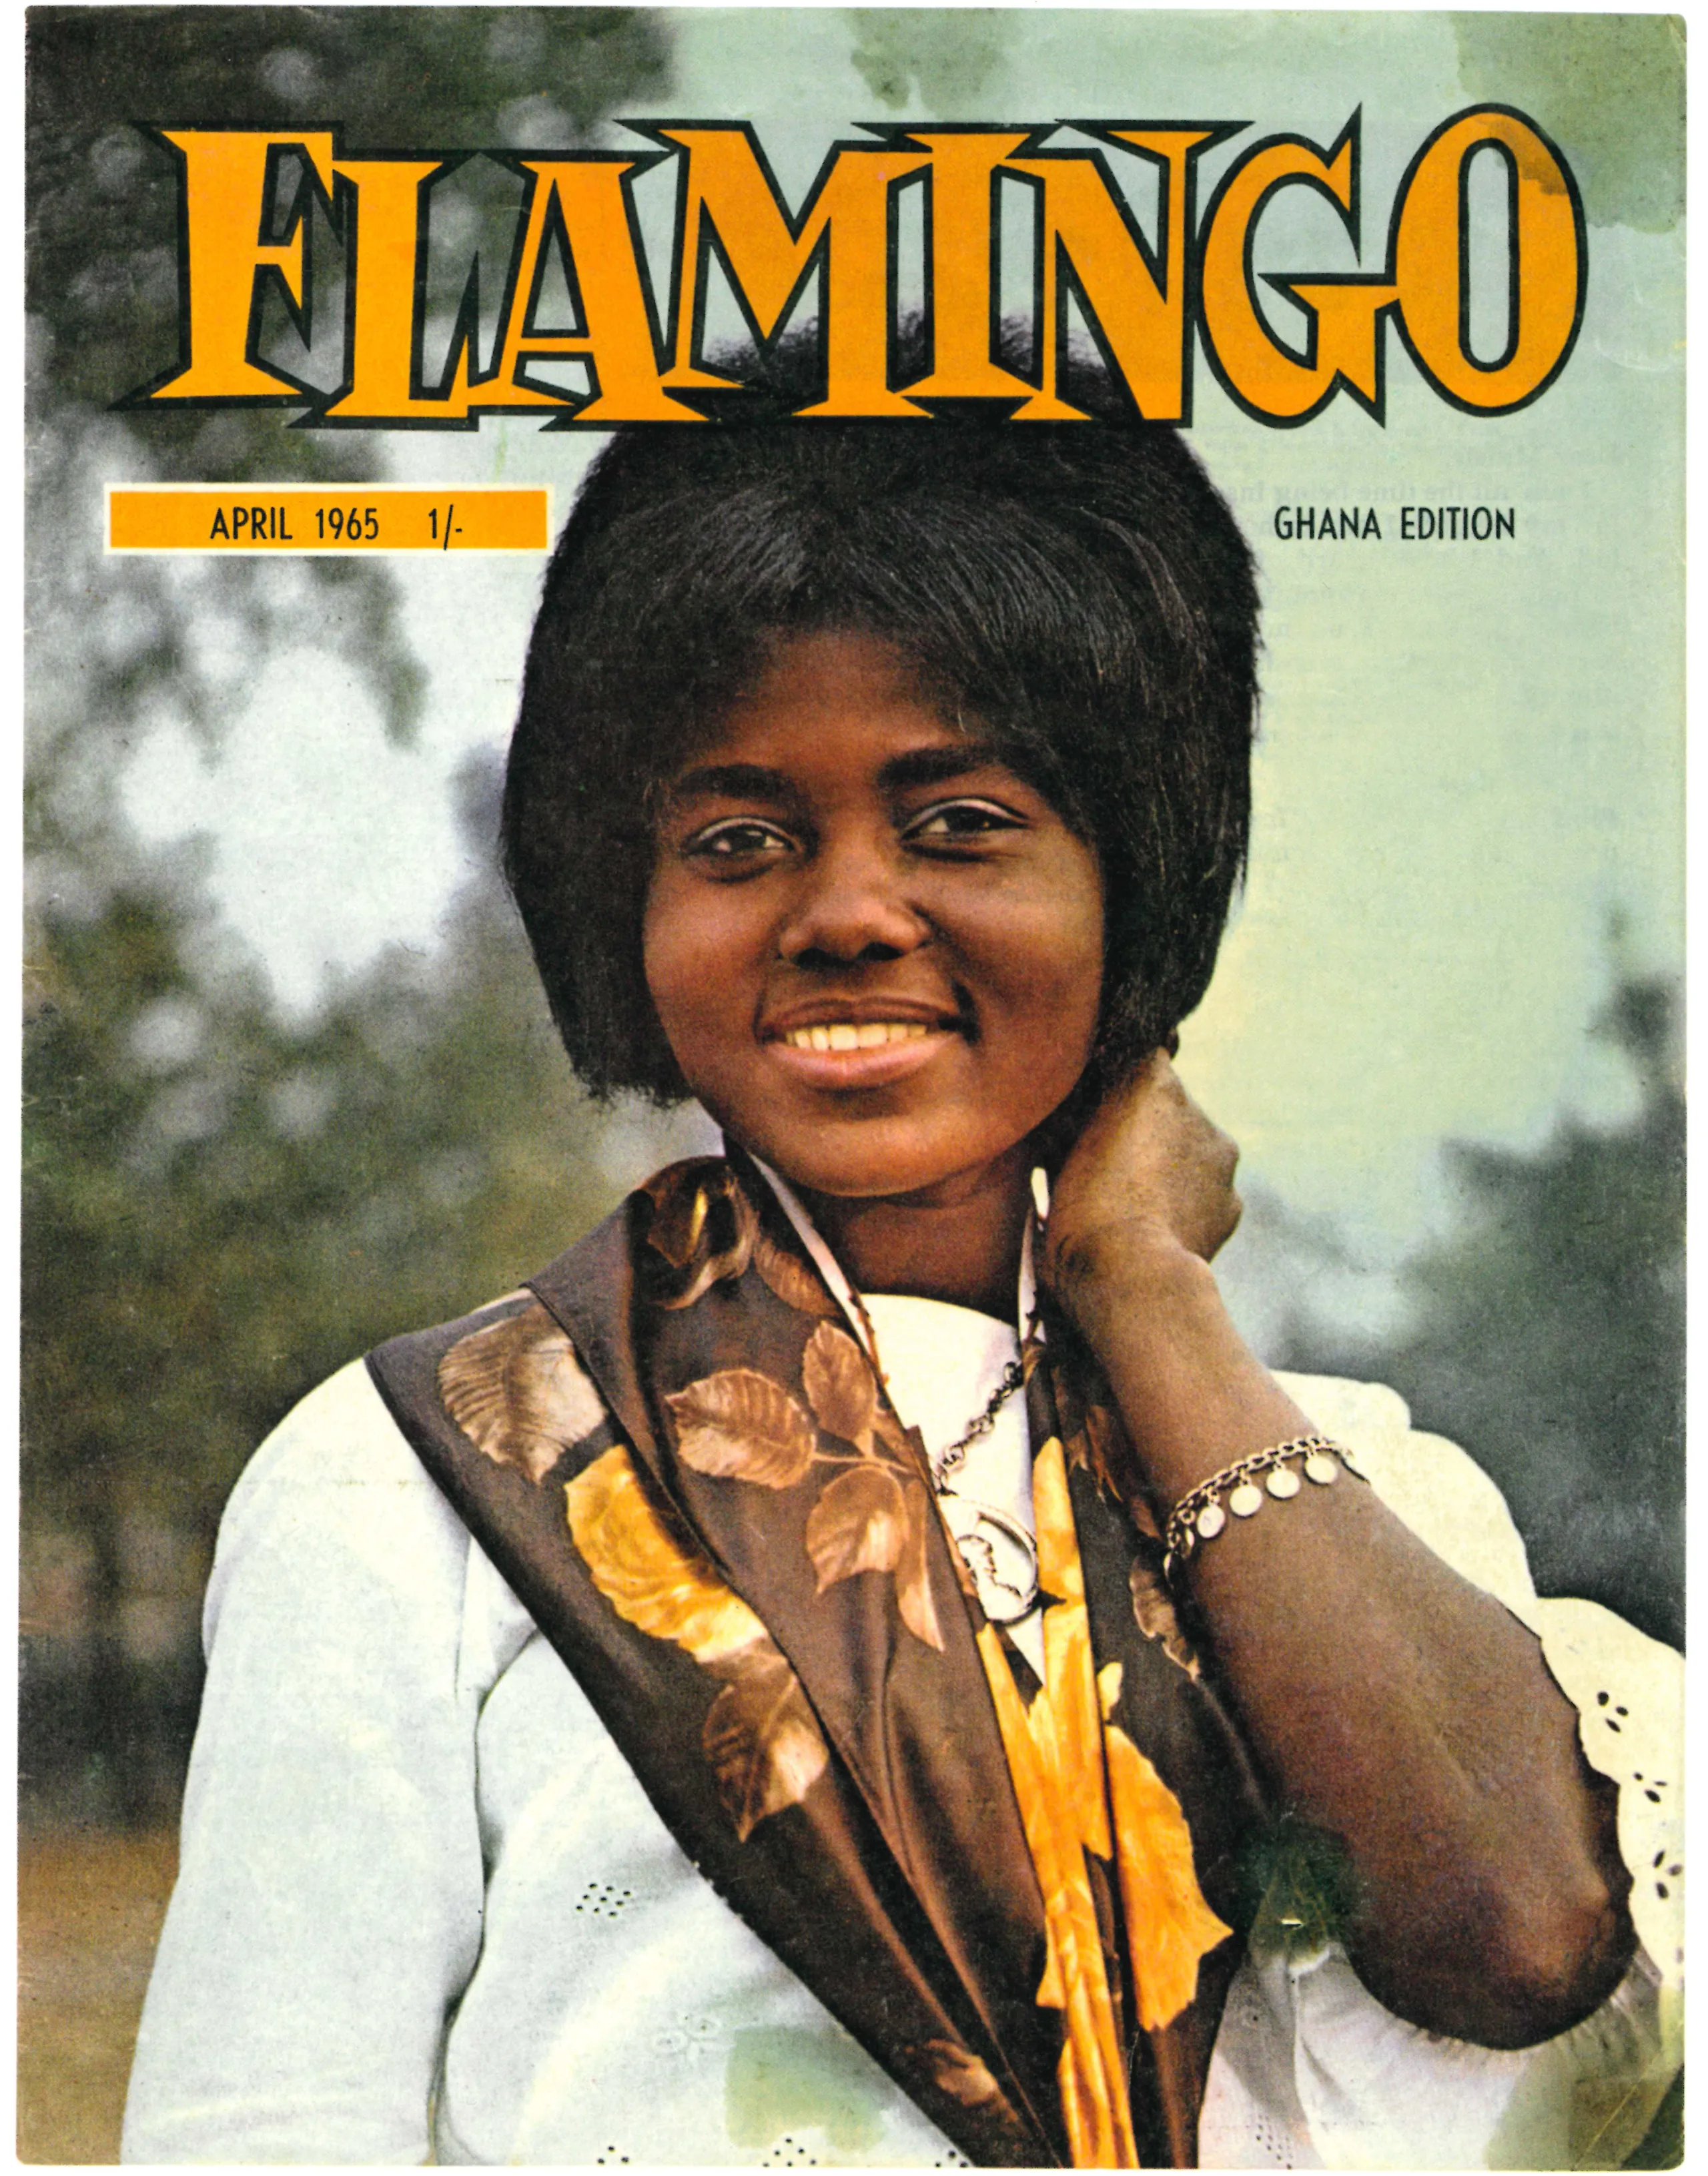 Cover of Flamingo magazine featuring Sarah Mills Okaikoi photographed by James Barnor, April 1965.